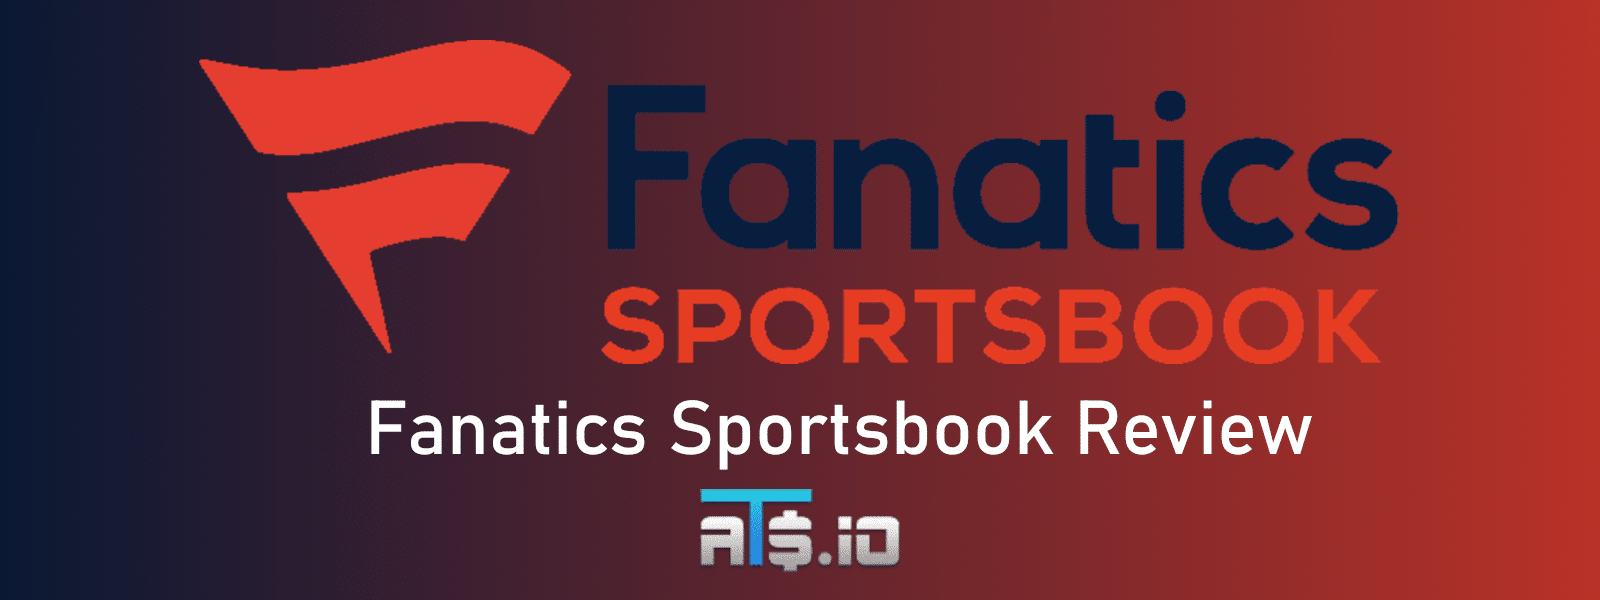 fanatics sportsbook review